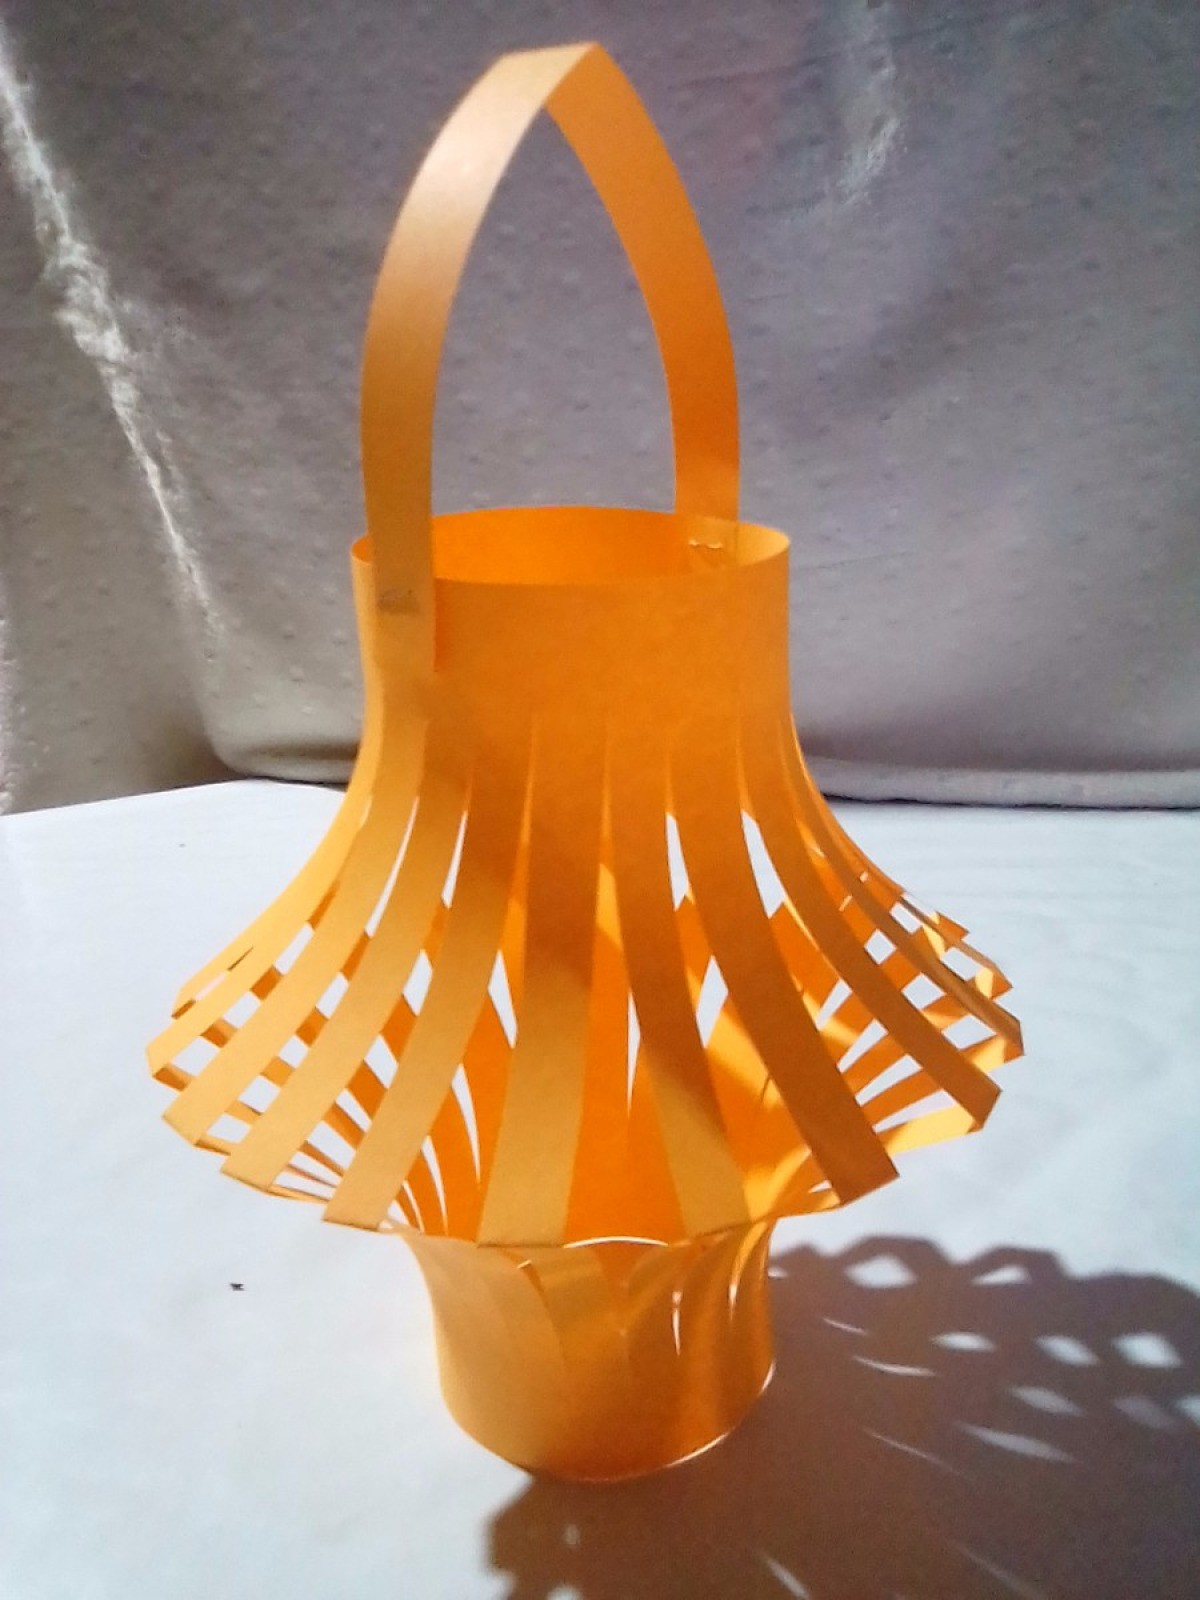 Chinese Lantern Making Factory Sale, Save 66% | jlcatj.gob.mx